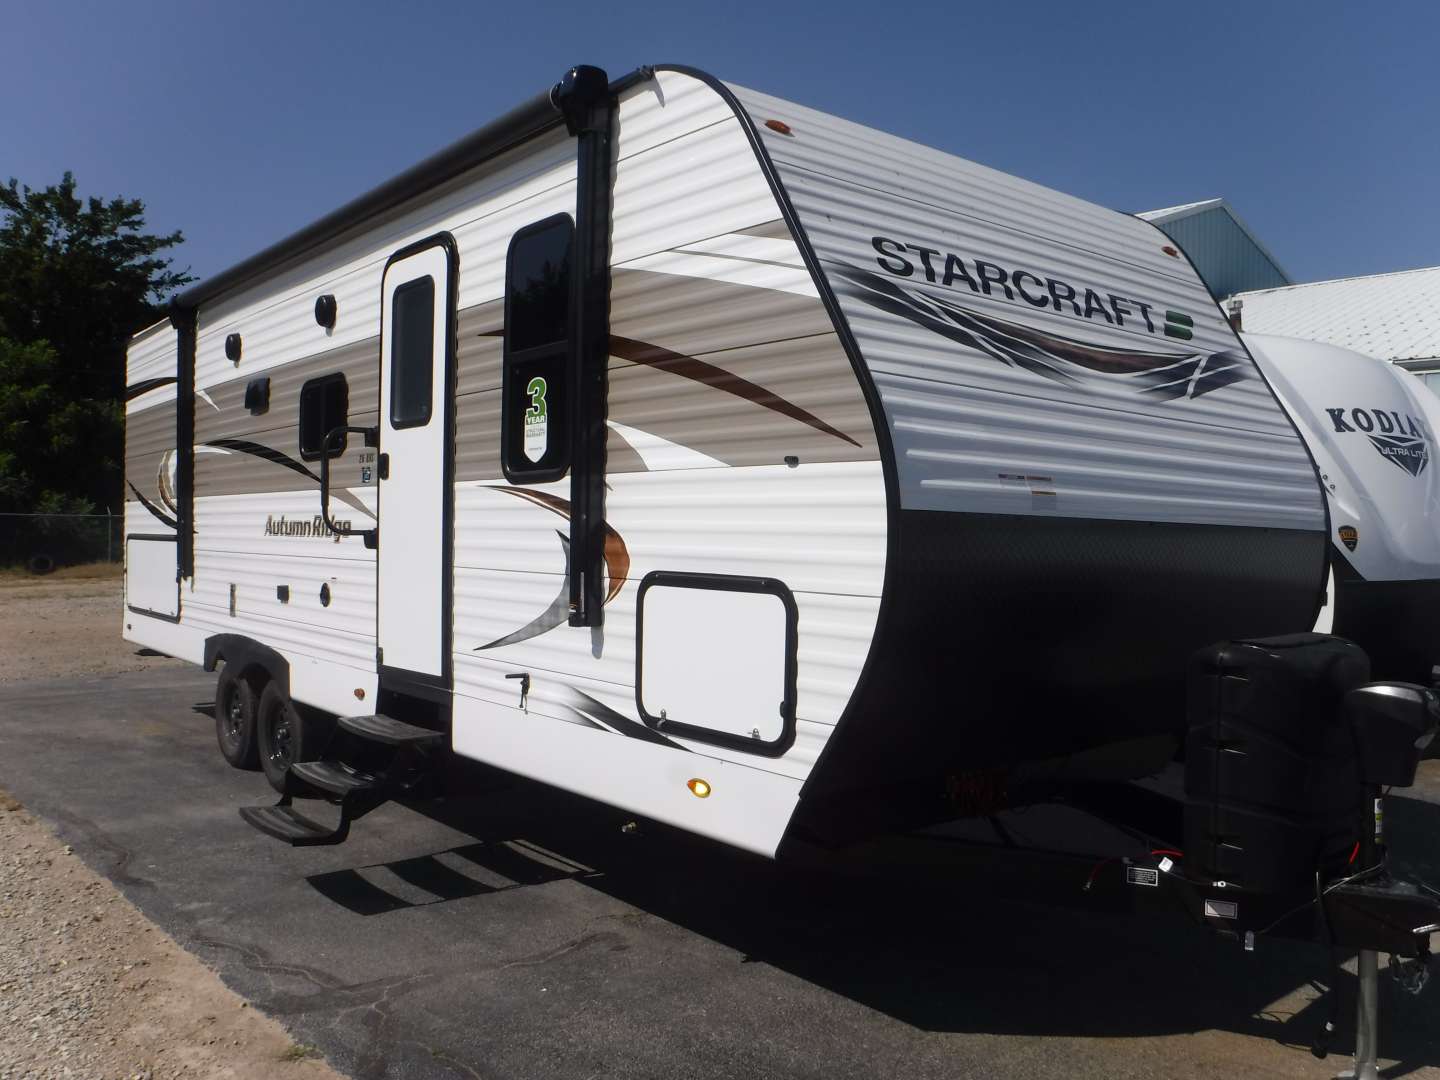 starcraft travel trailer models